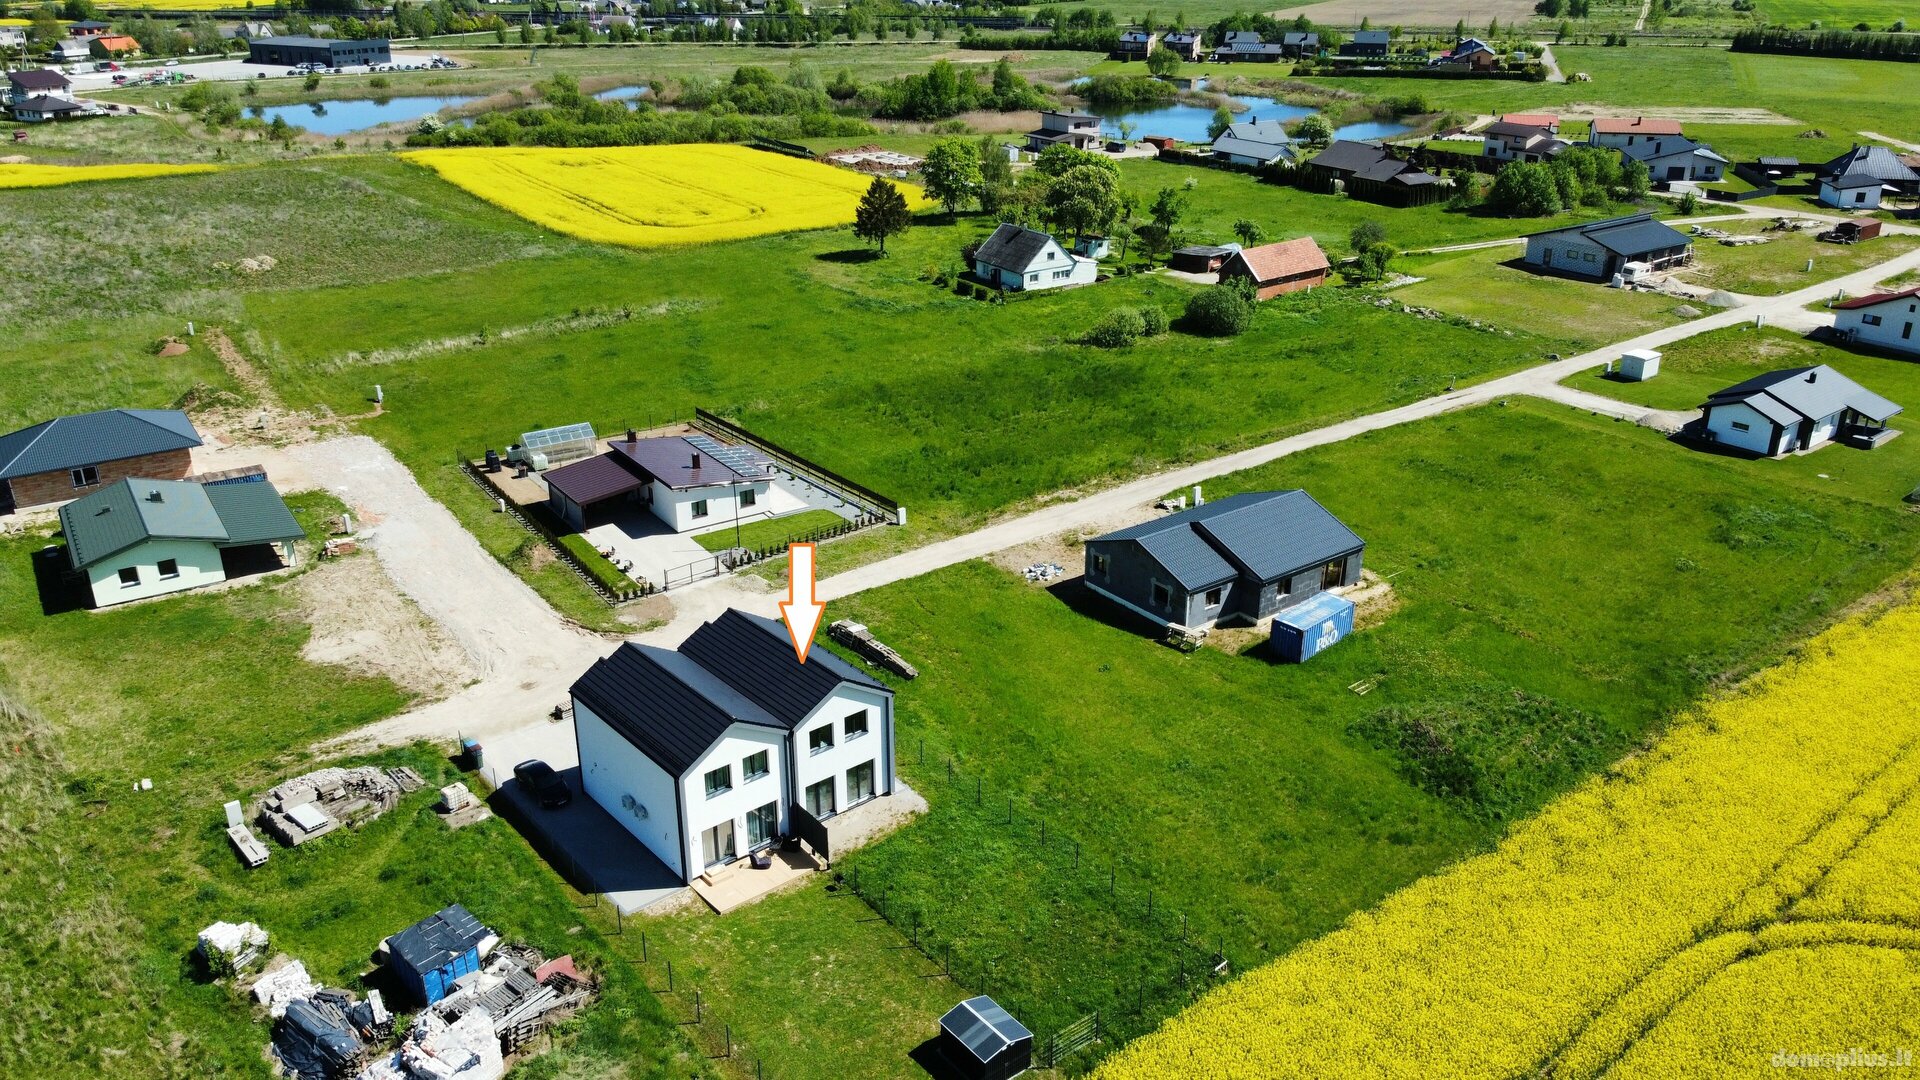 Semi-detached house for sale Kaune, Rokuose, K. Paltaroko g.